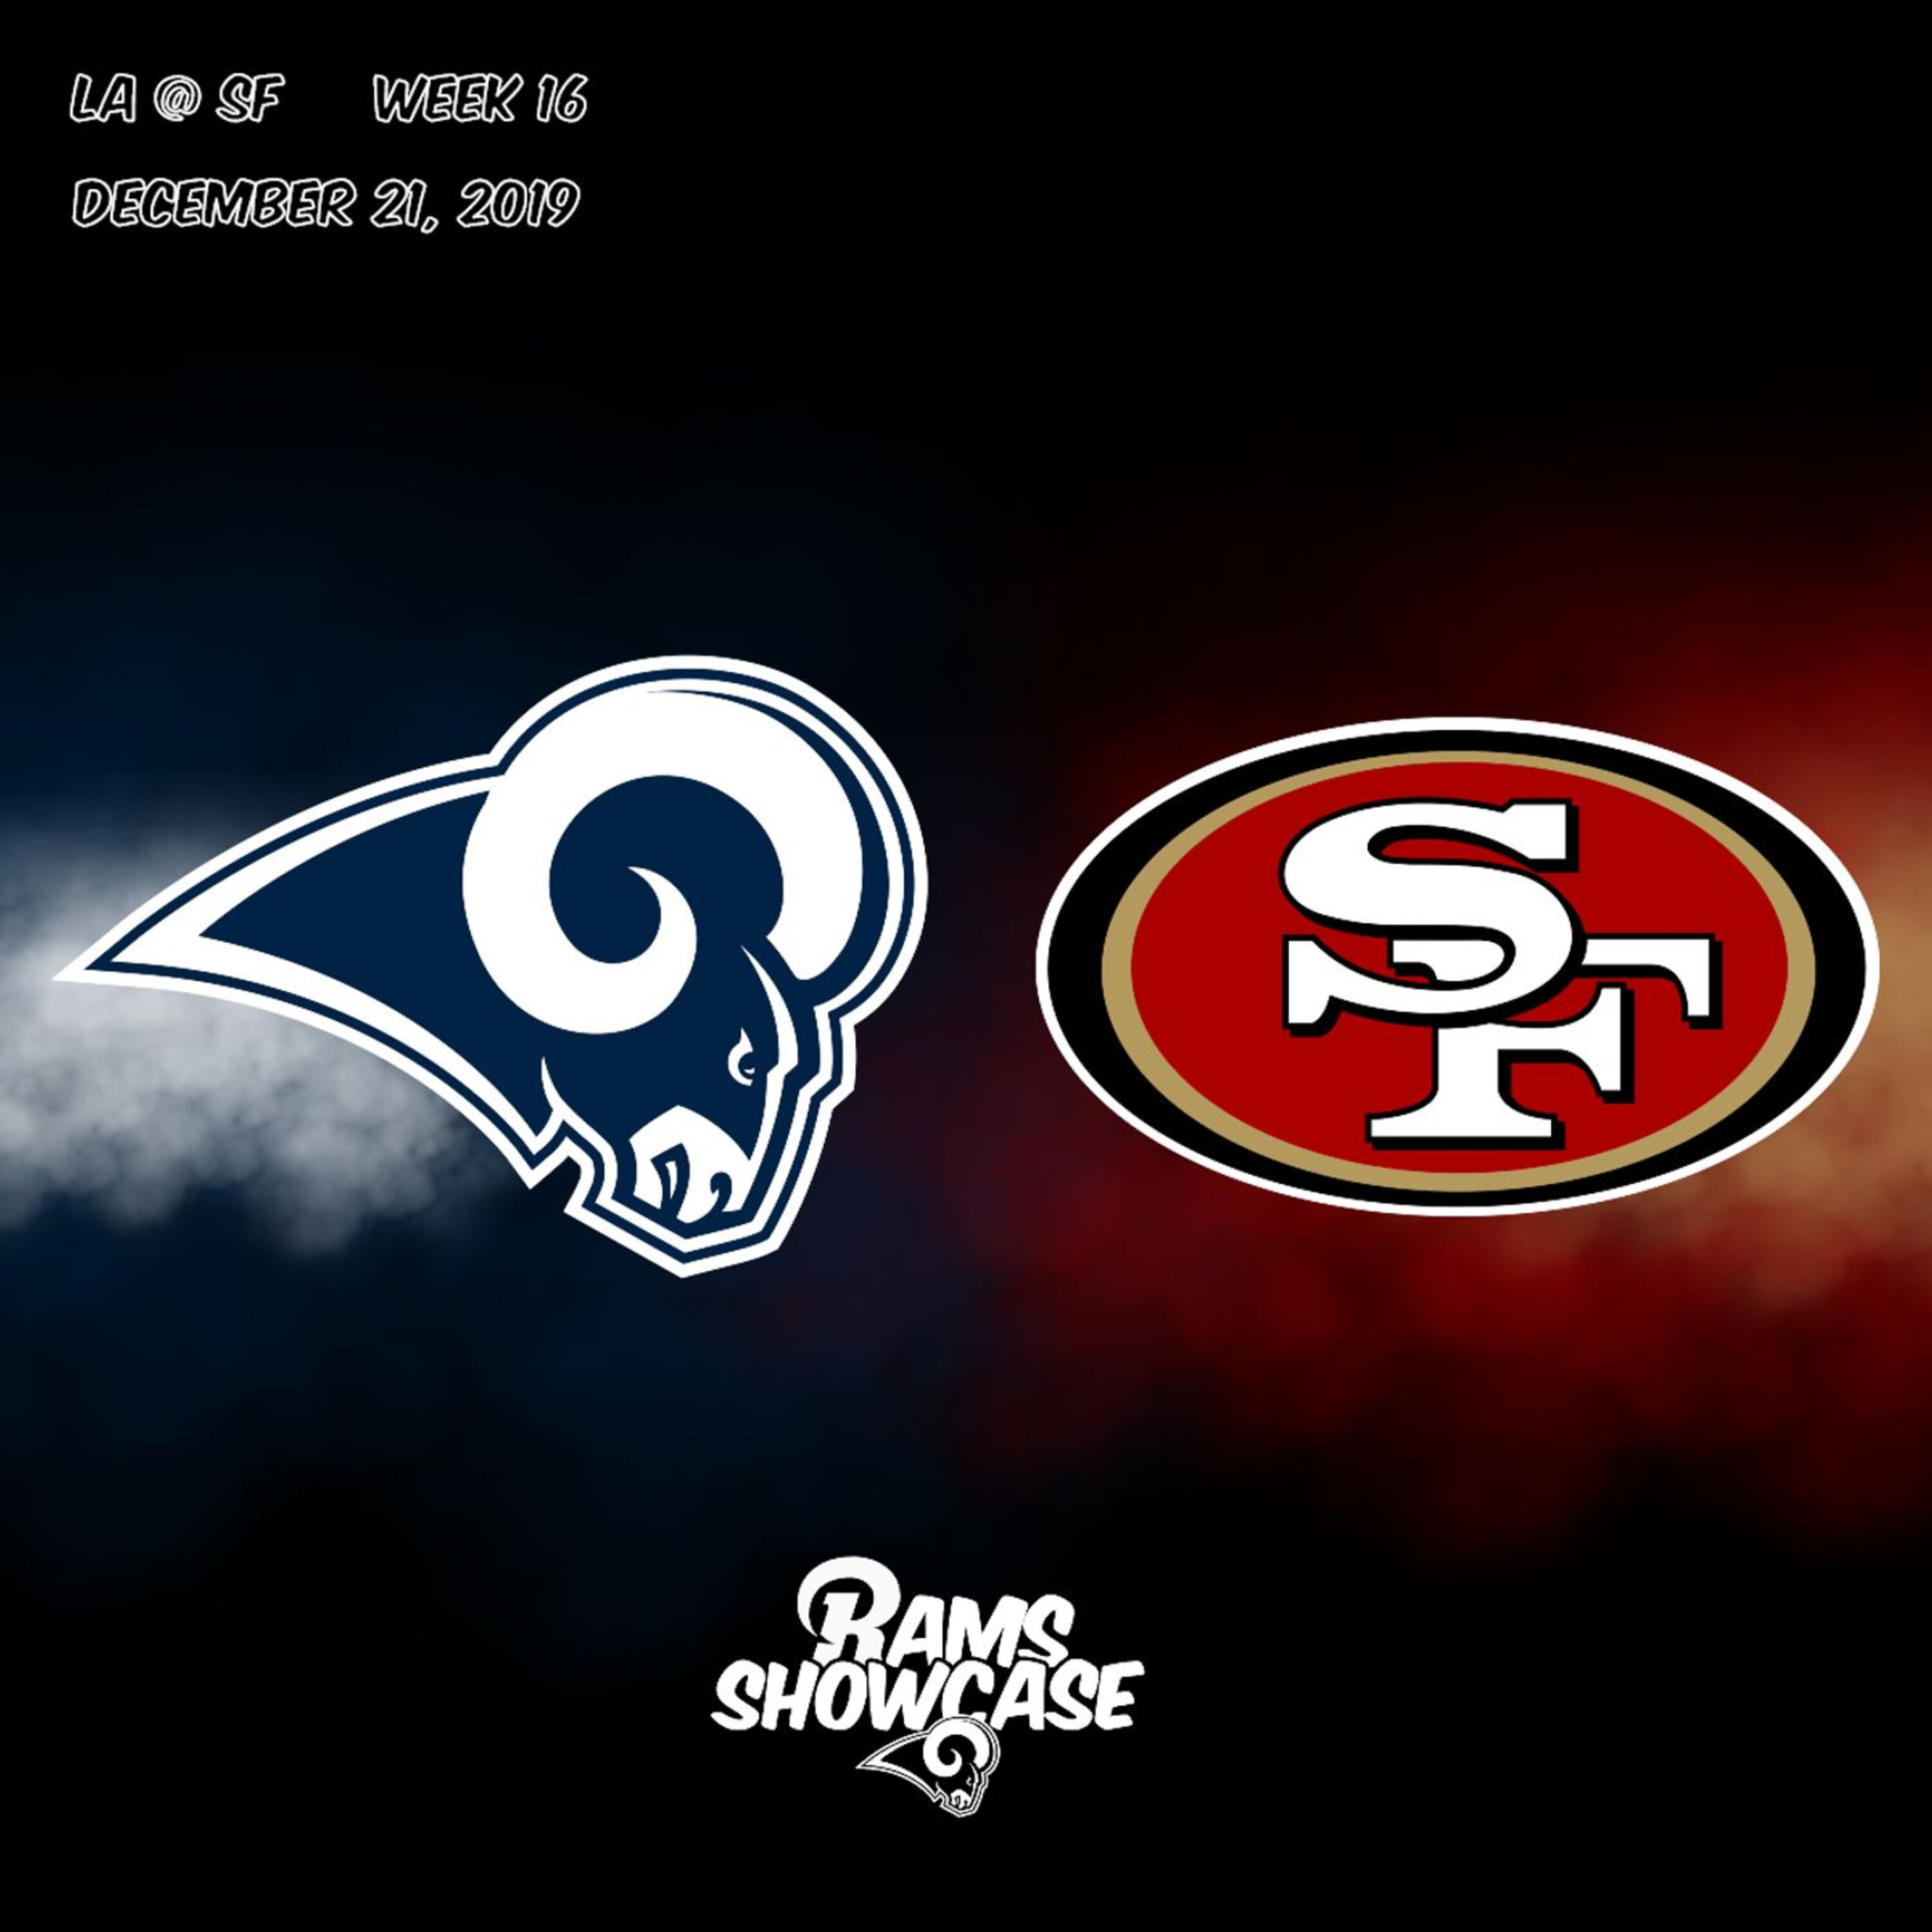 Rams Showcase - Rams @ 49ers